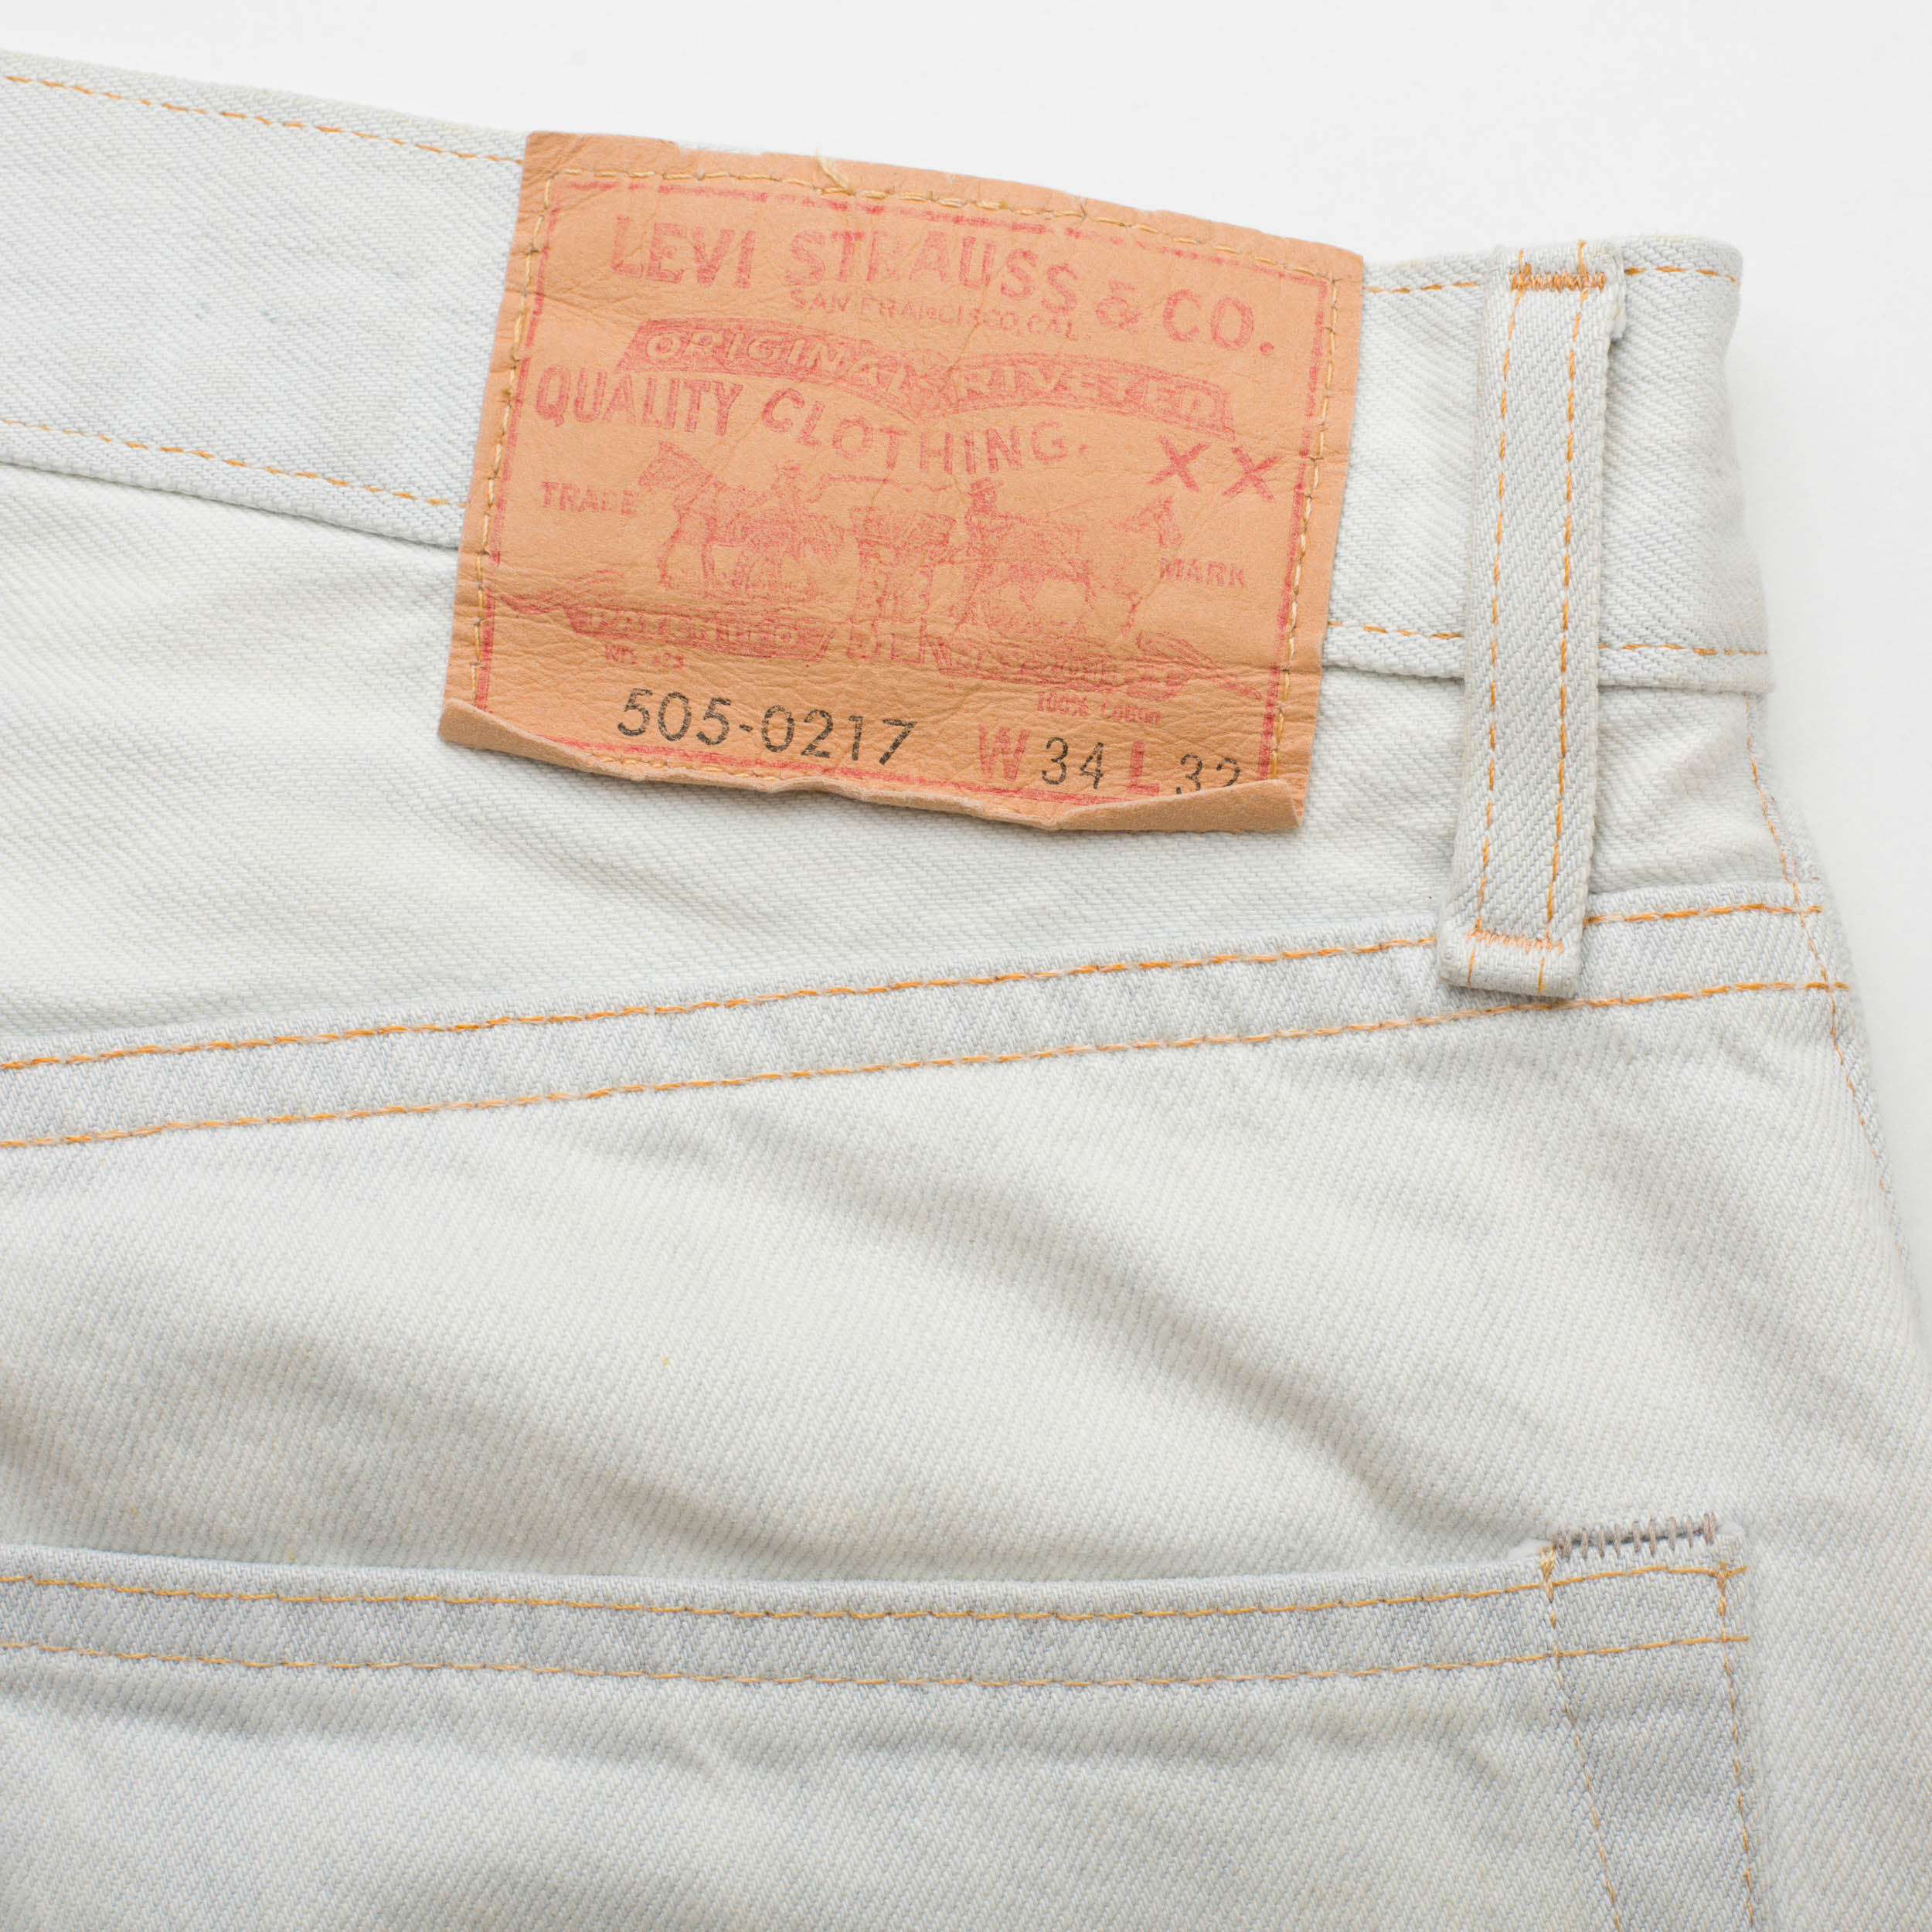 LEVI'S Vintage Clothing 505-0217 Light Denim Selvedge Slim Jeans W34 L32